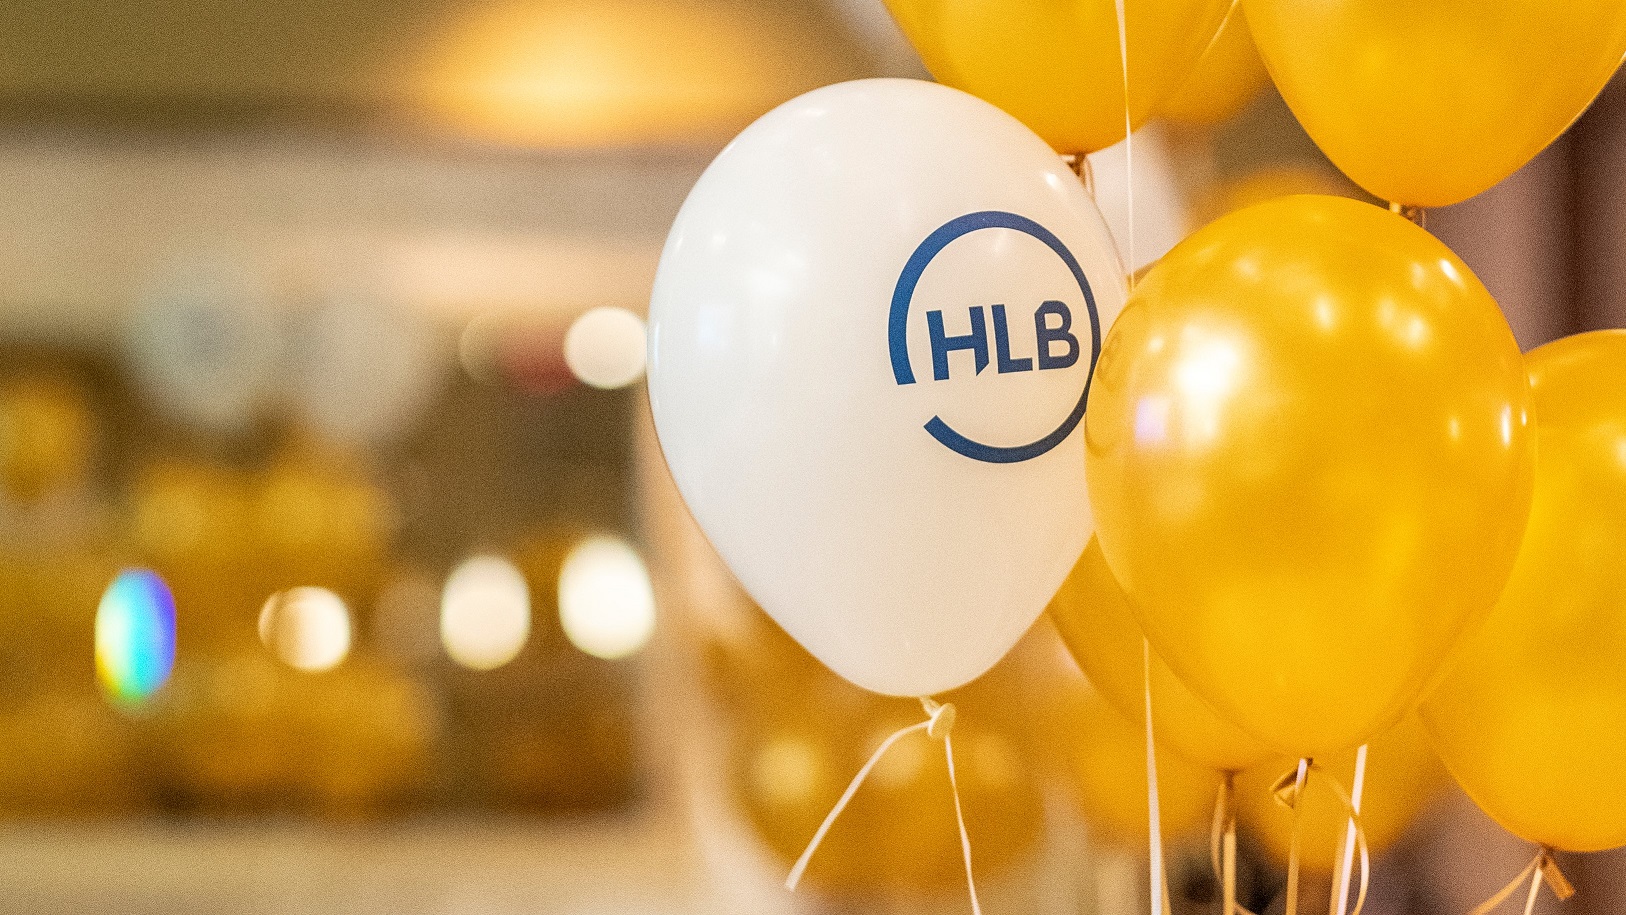 Featured image for “HLB国际荣获「2020全球最佳会计师事务所网络」殊荣”